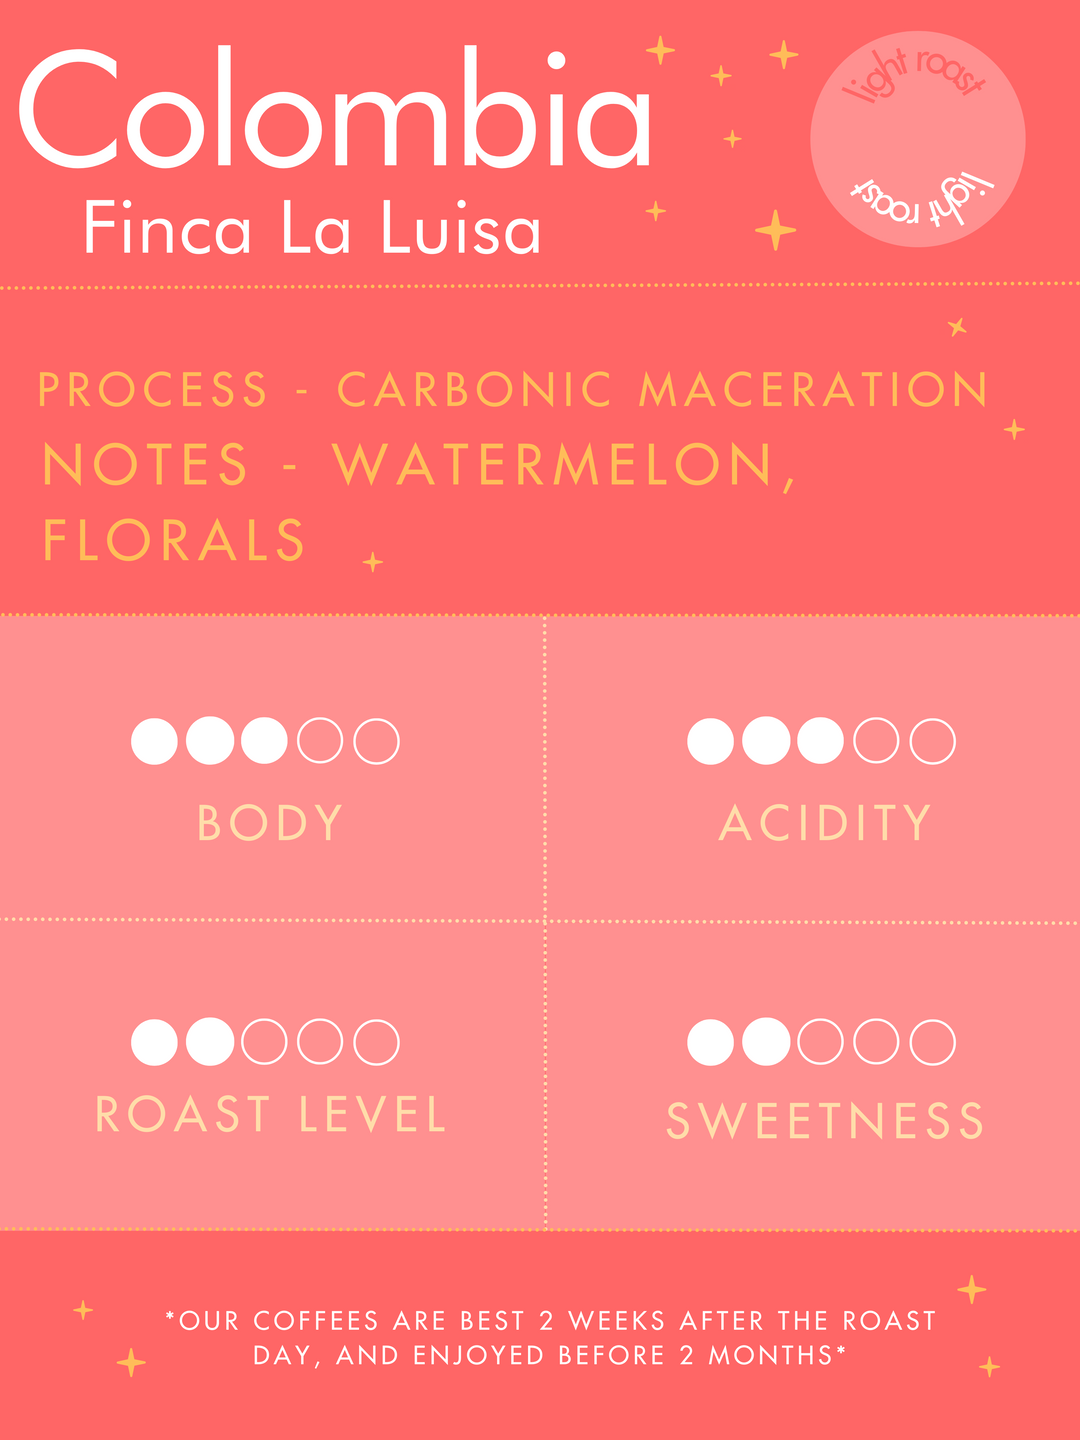 Colombia | Finca La Luisa | Carbonic Macerated Process